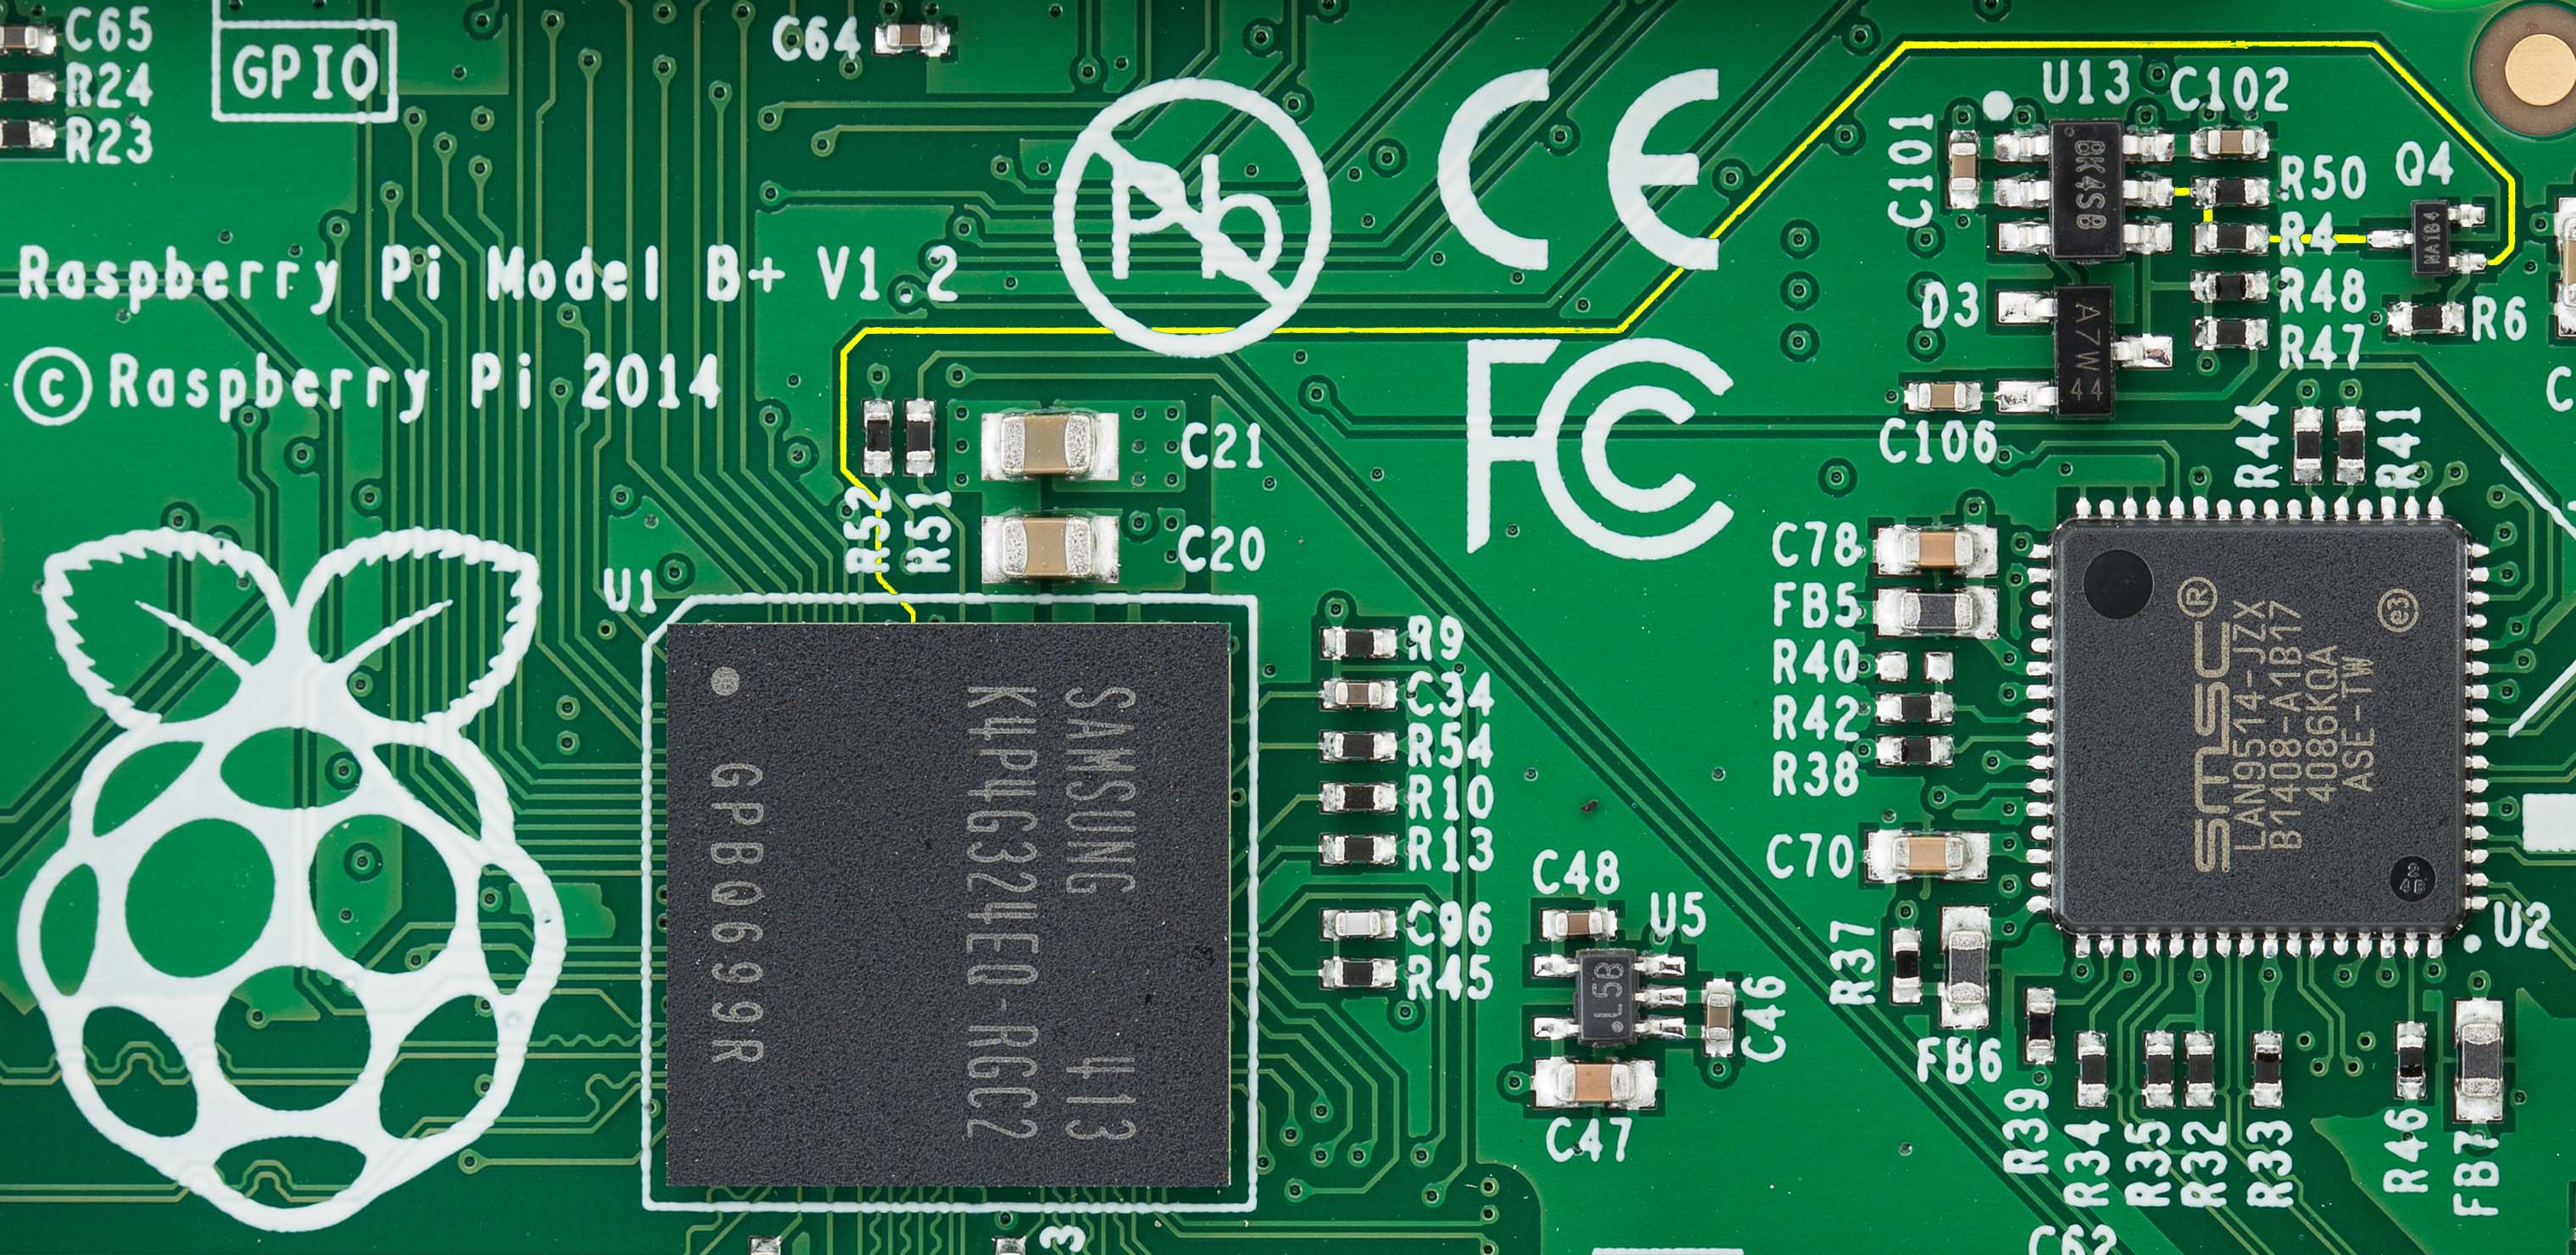 auroch Fest automat More Power For Raspberry Pi USB Ports | Hackaday